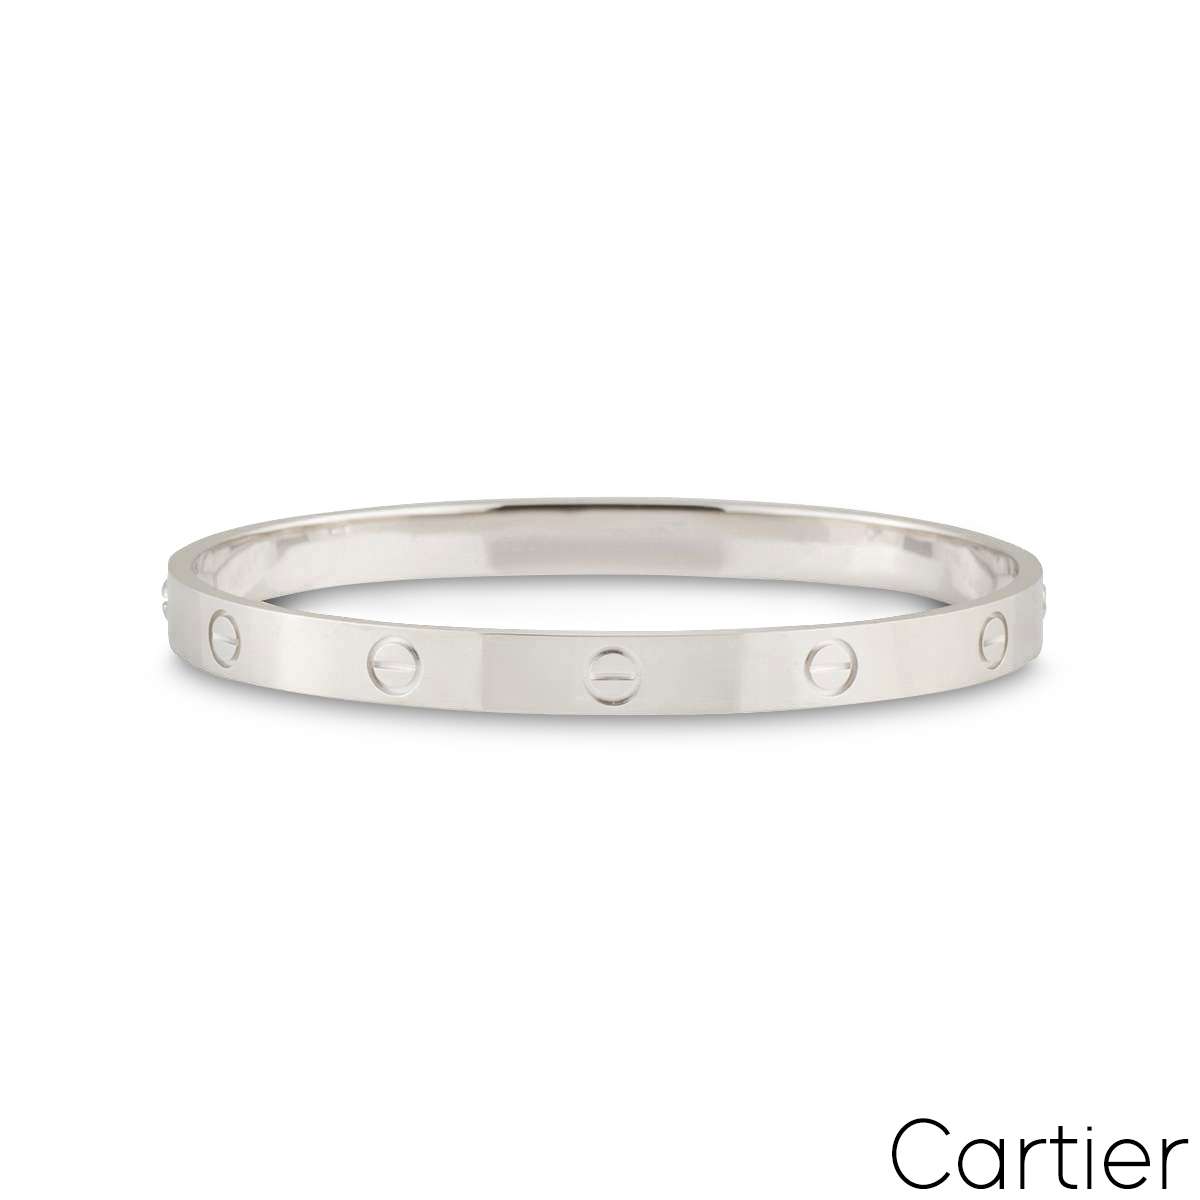 Cartier White Gold Plain Love Bracelet Size 19 B6035419